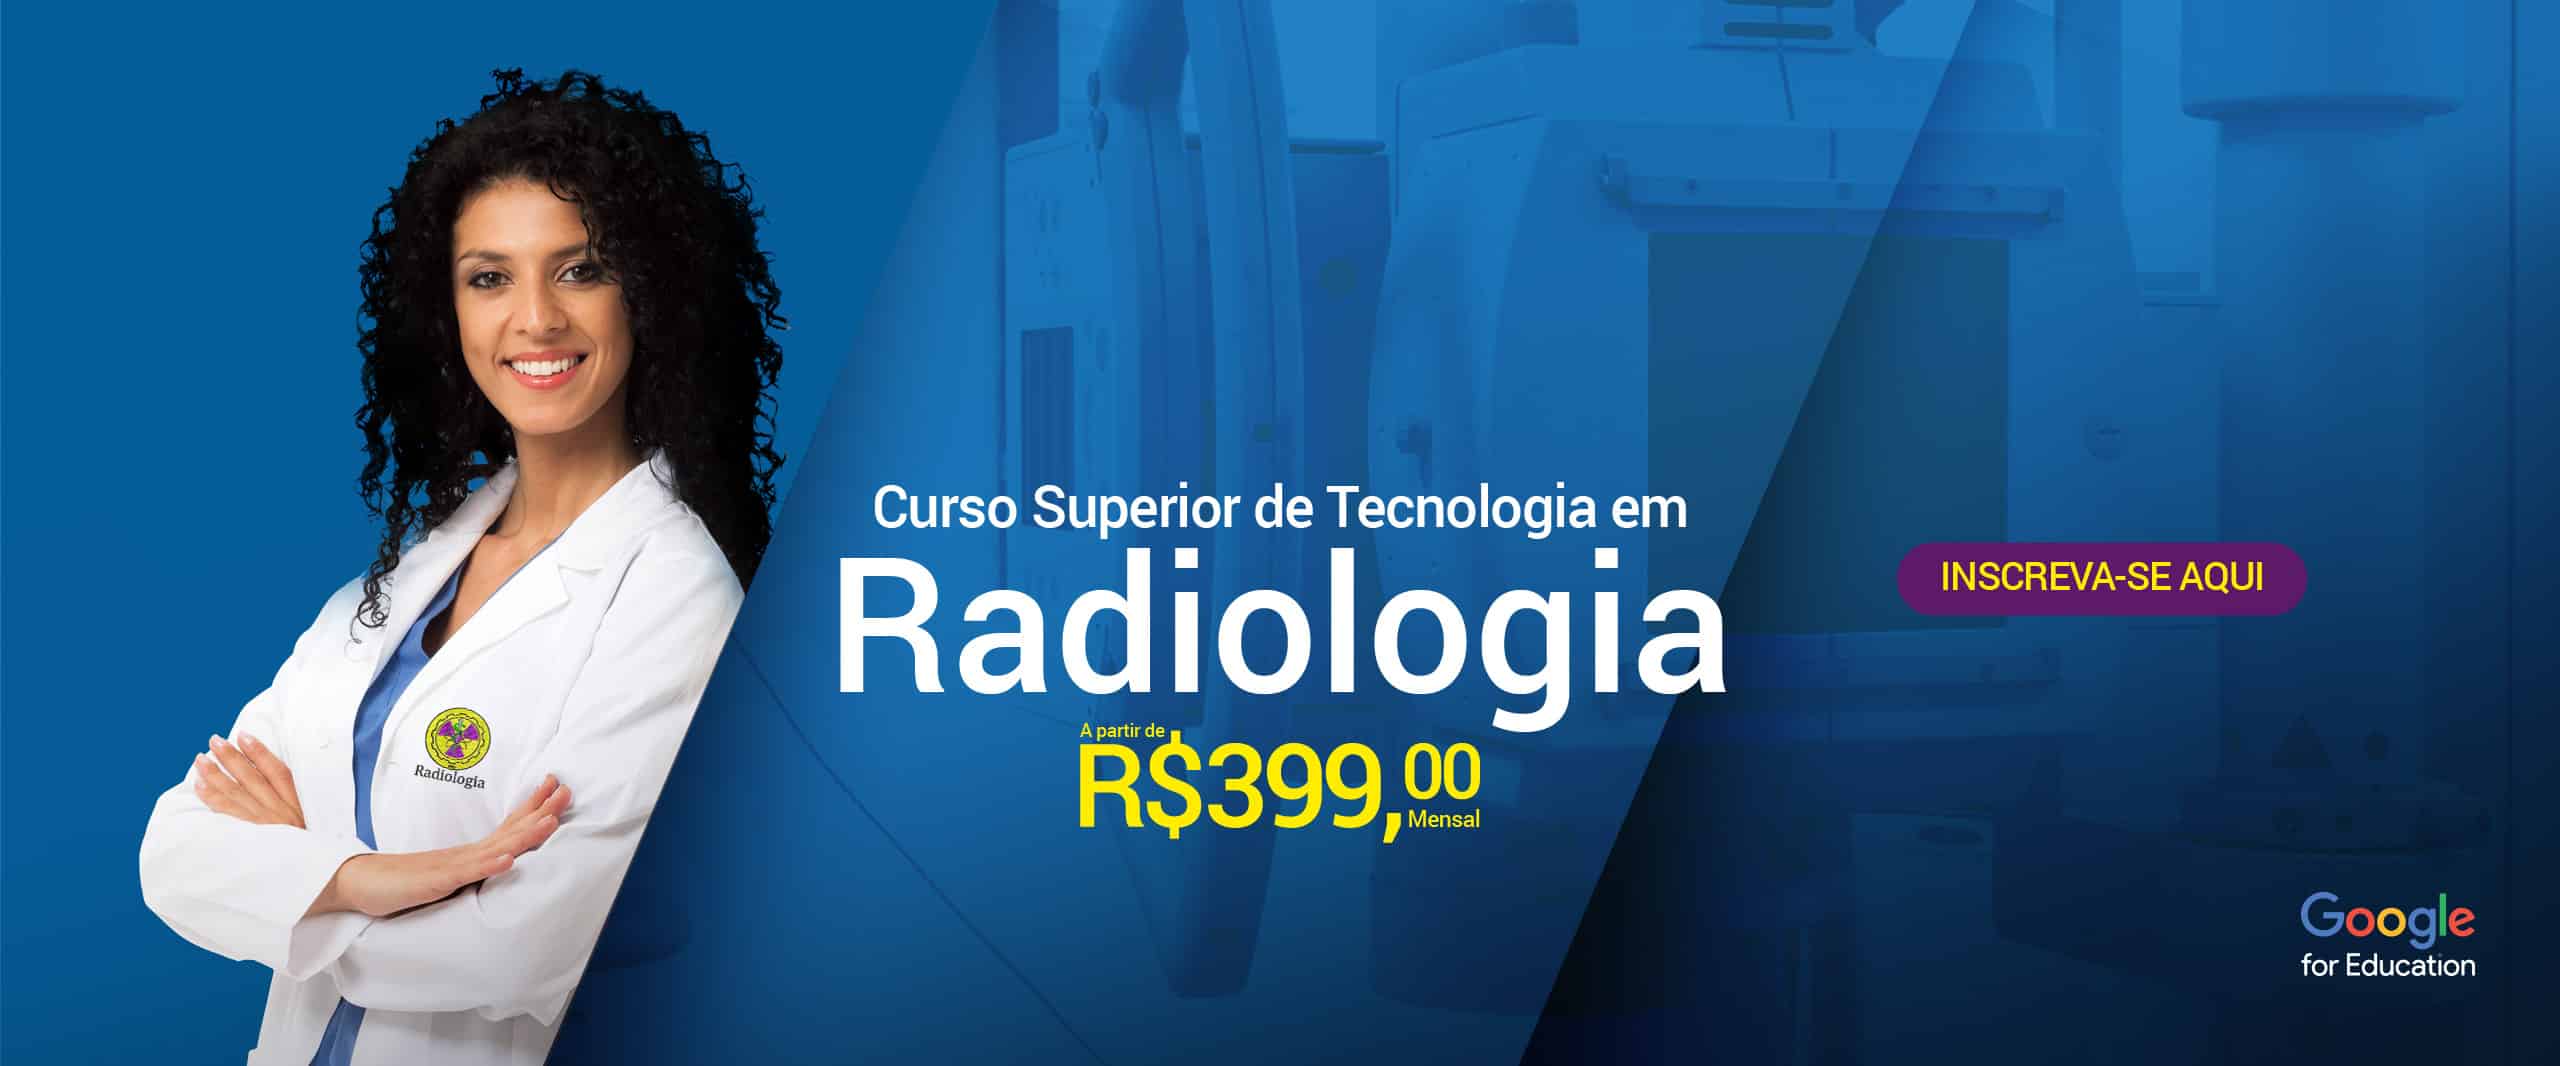 Slide_home_Radiologia